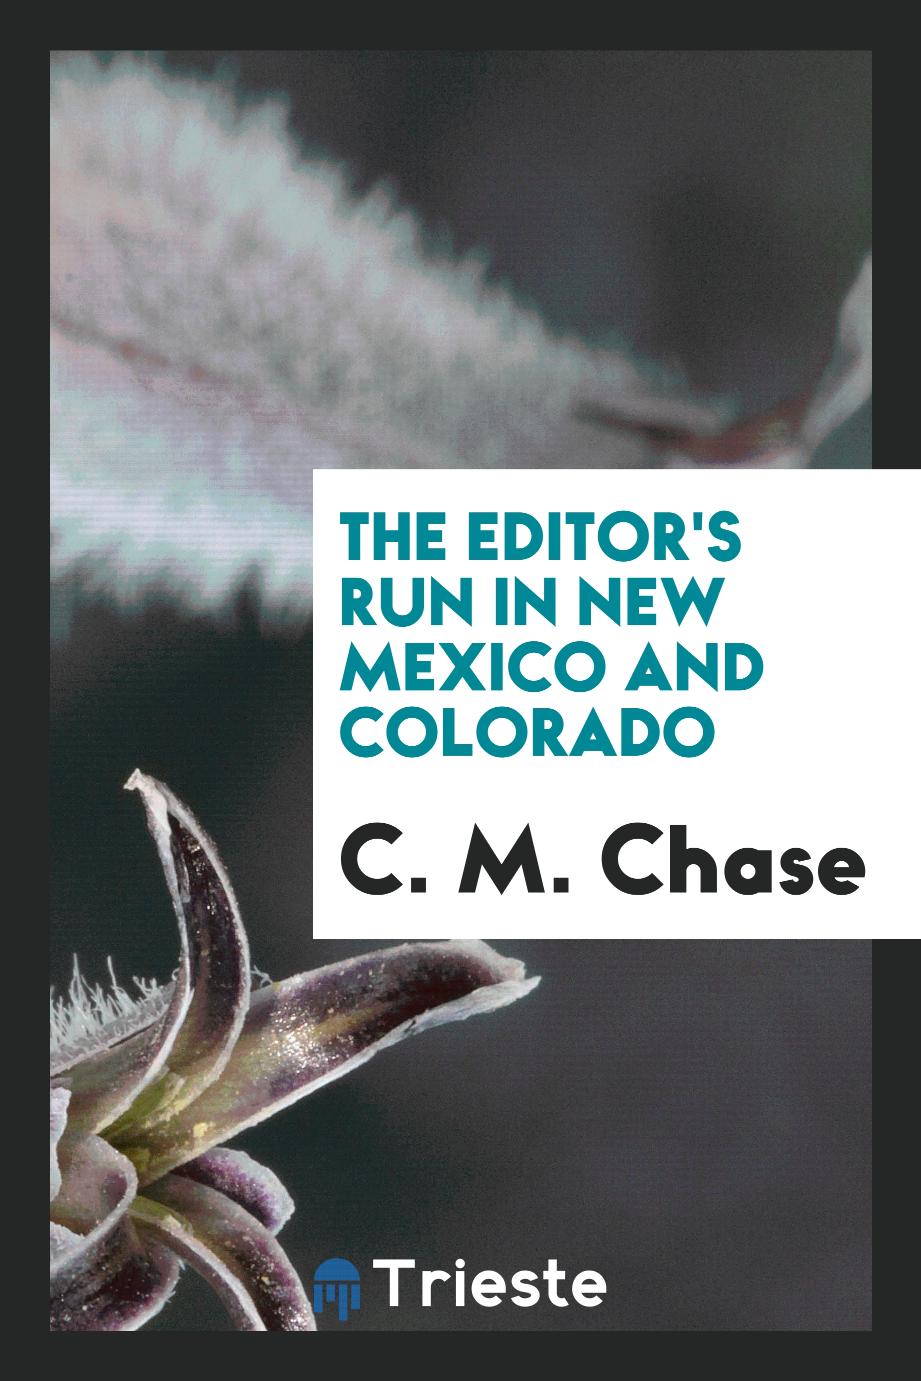 The editor's run in New Mexico and Colorado